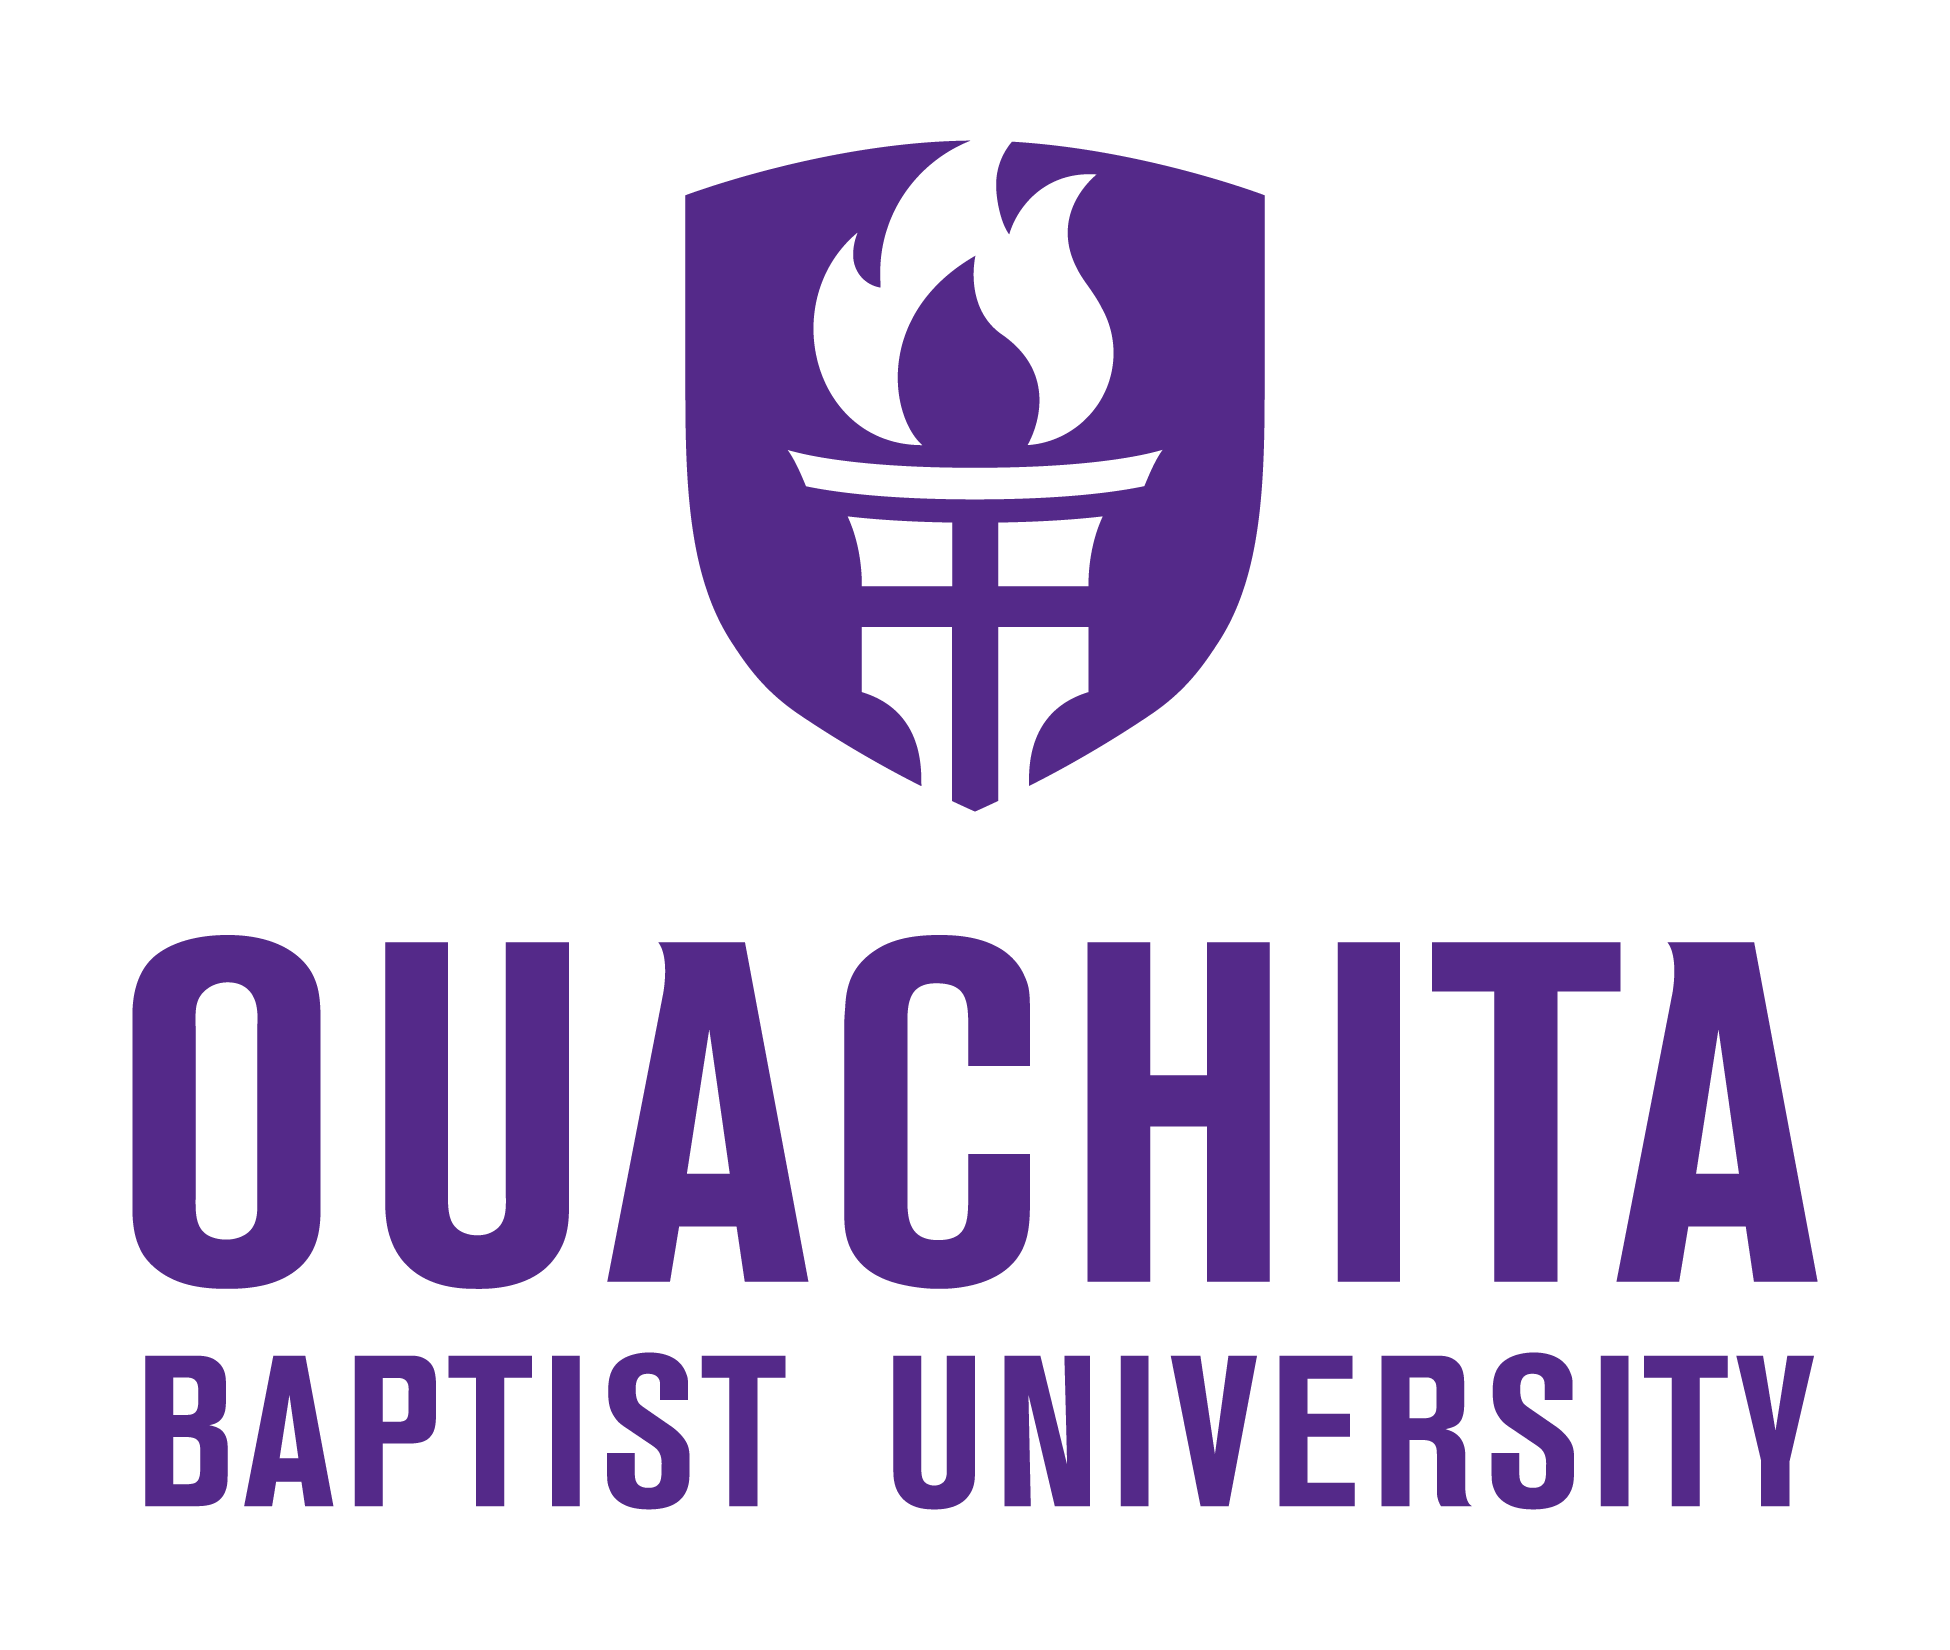 Ouachita Baptist University logo